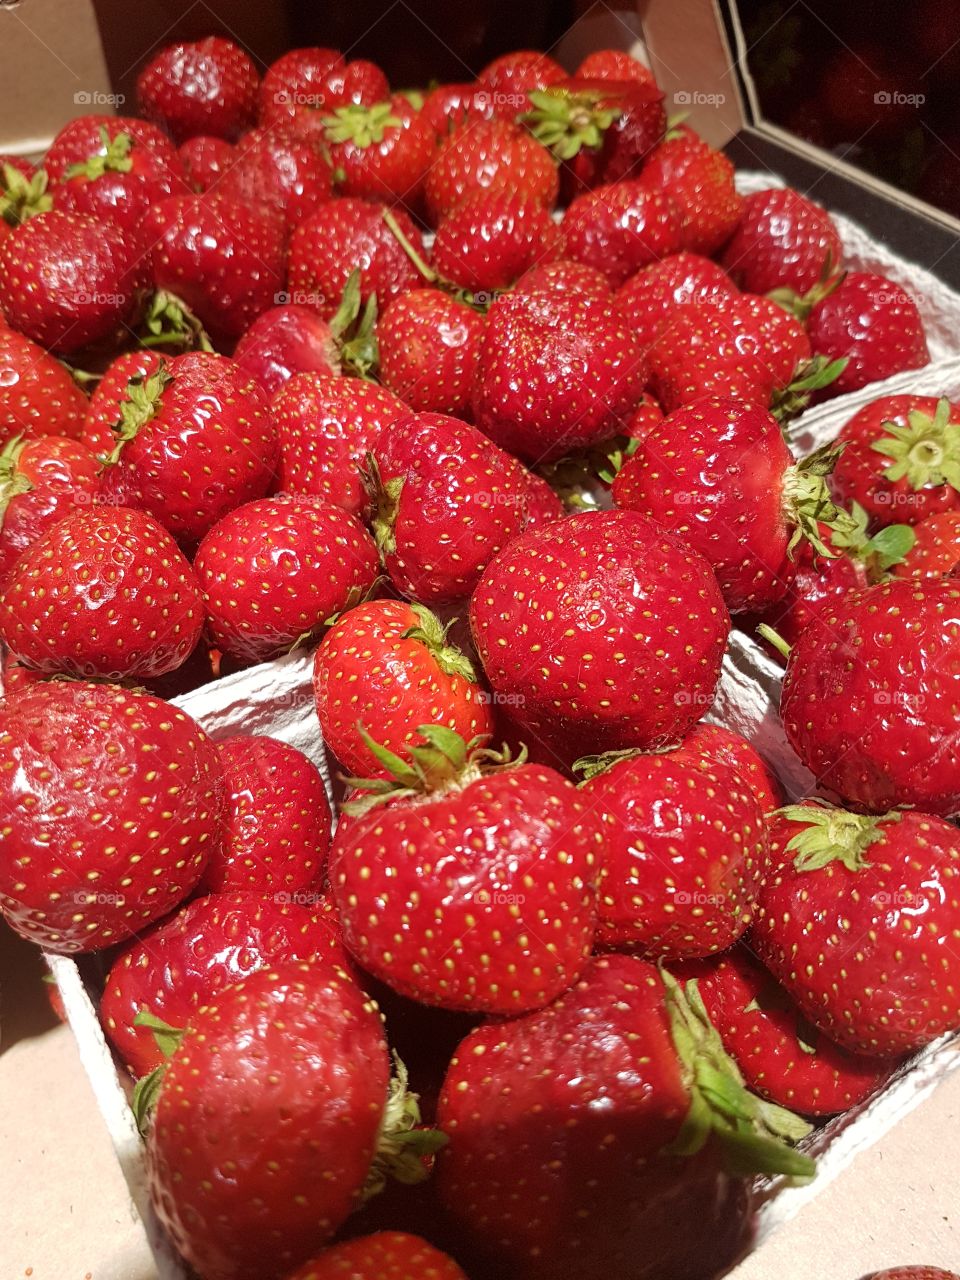 Red, organic and super fresh berries